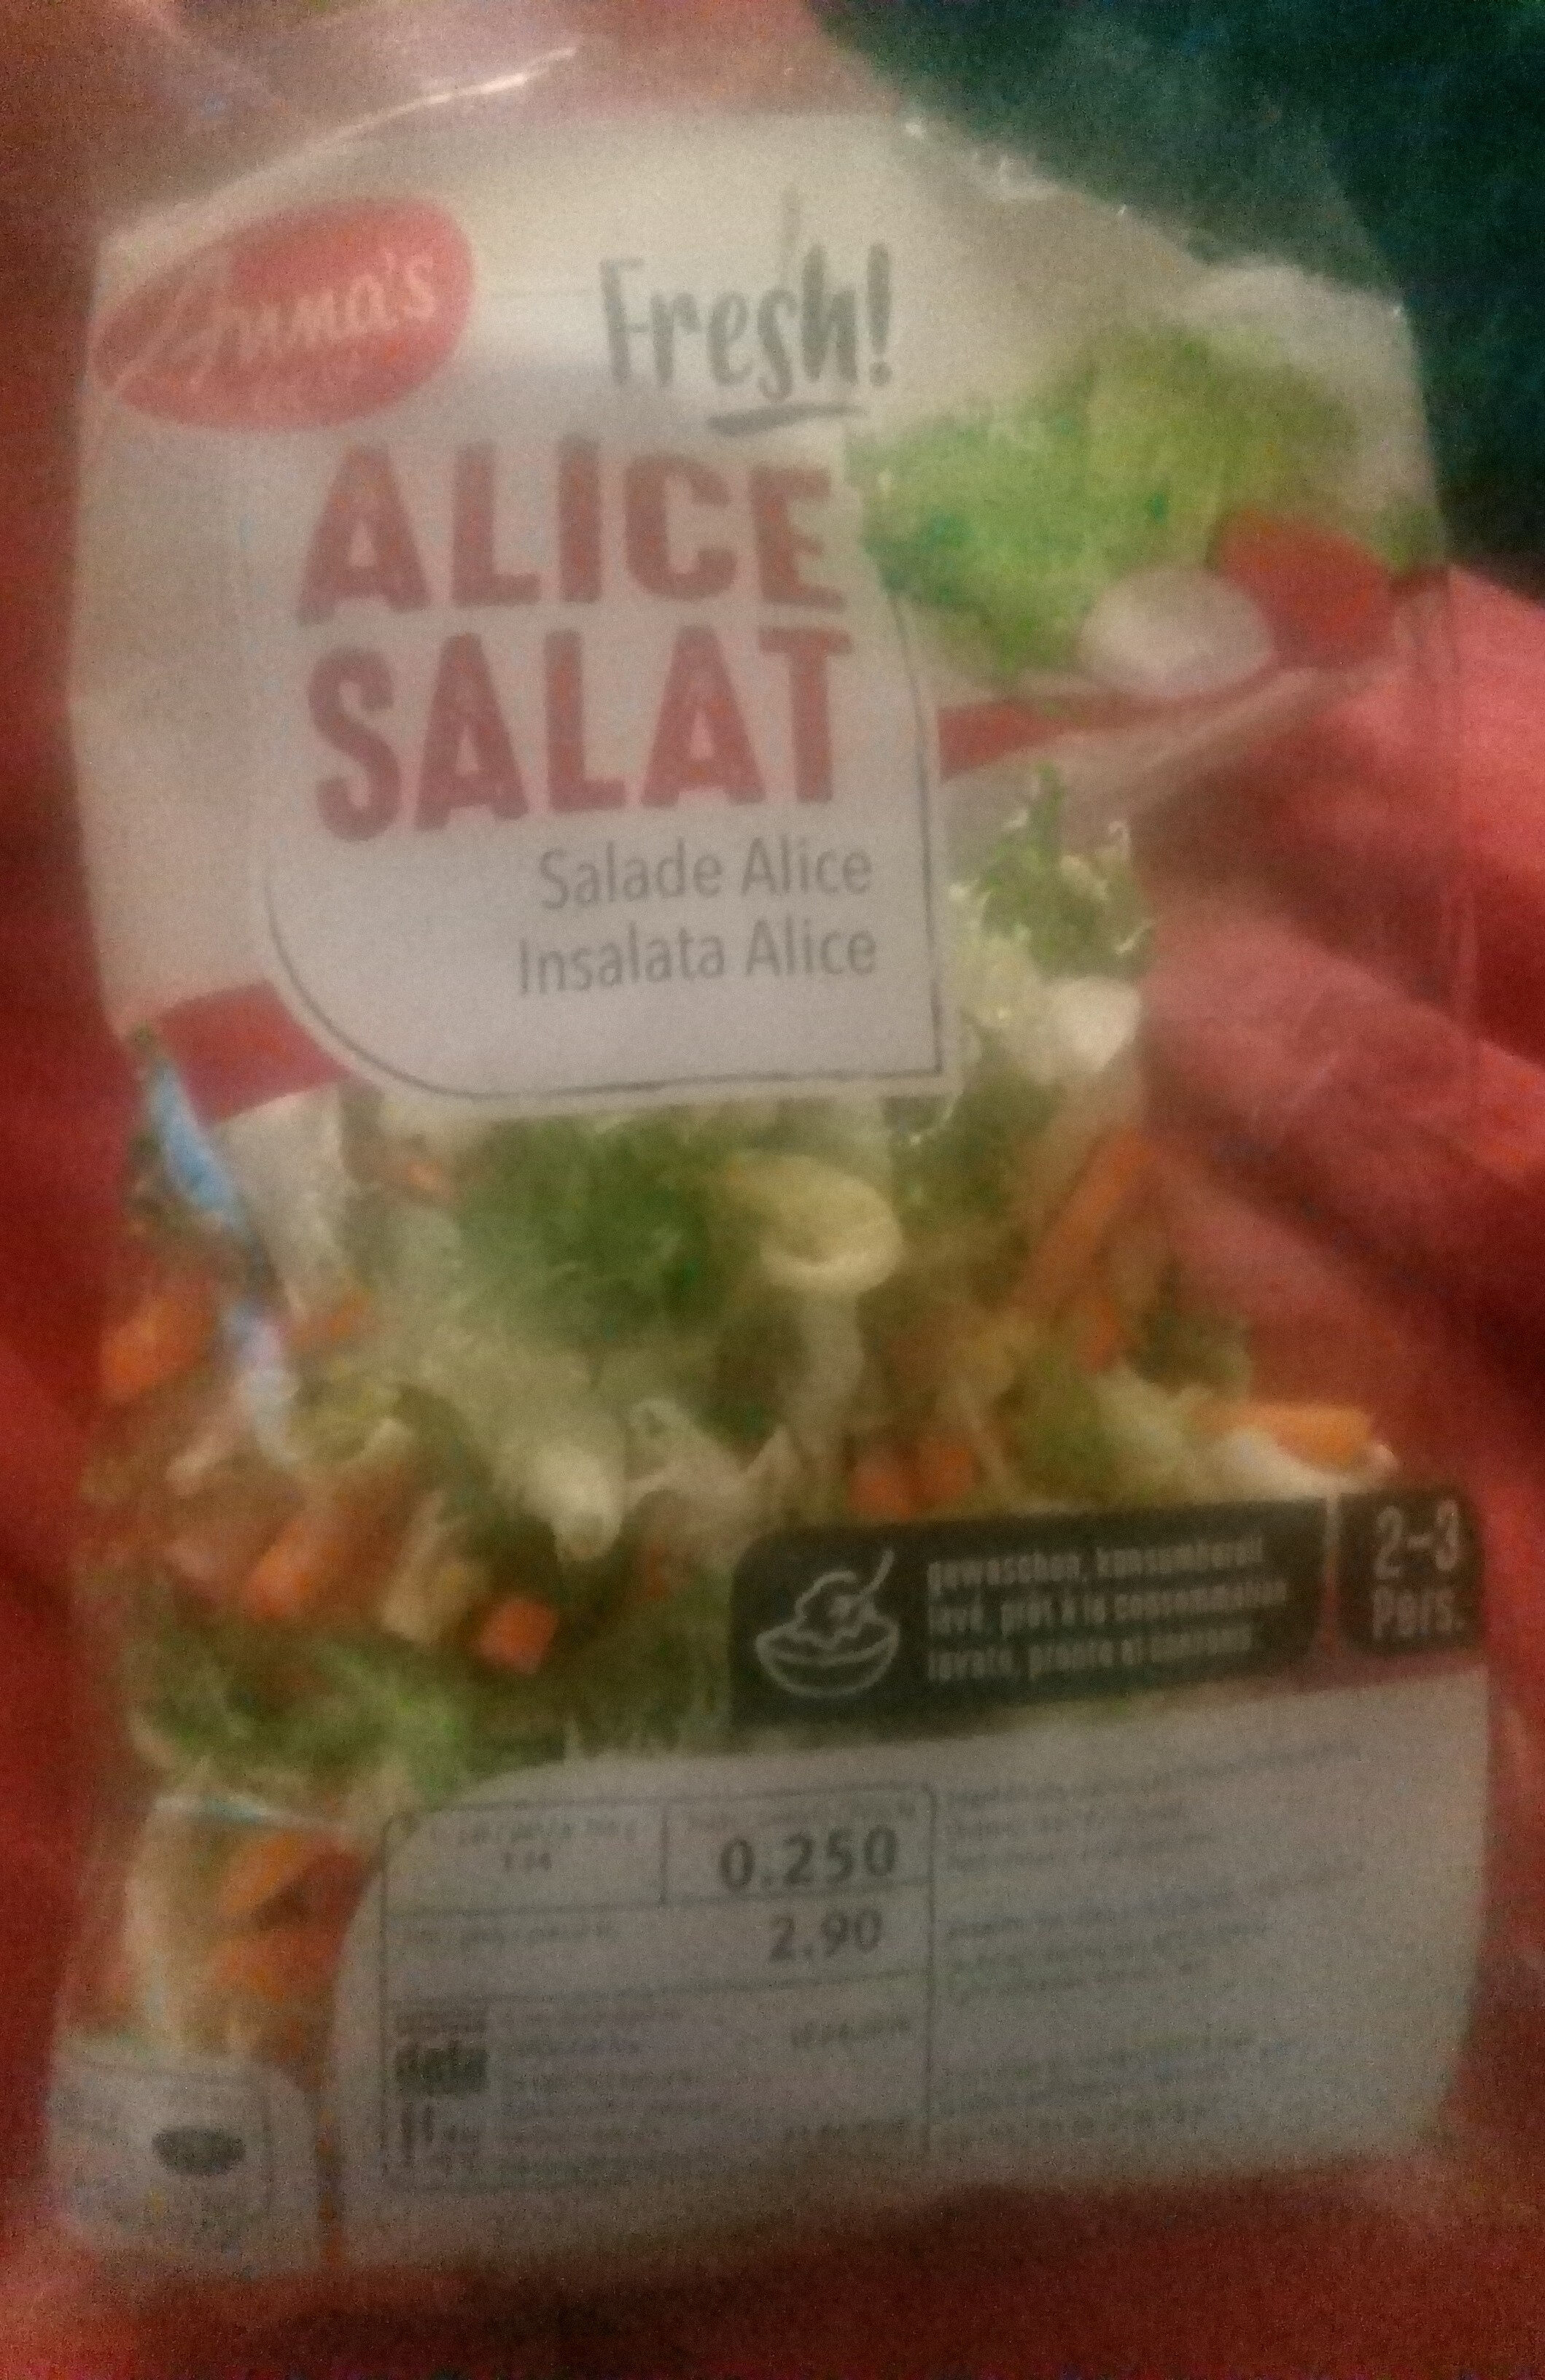 Alice salat - Product